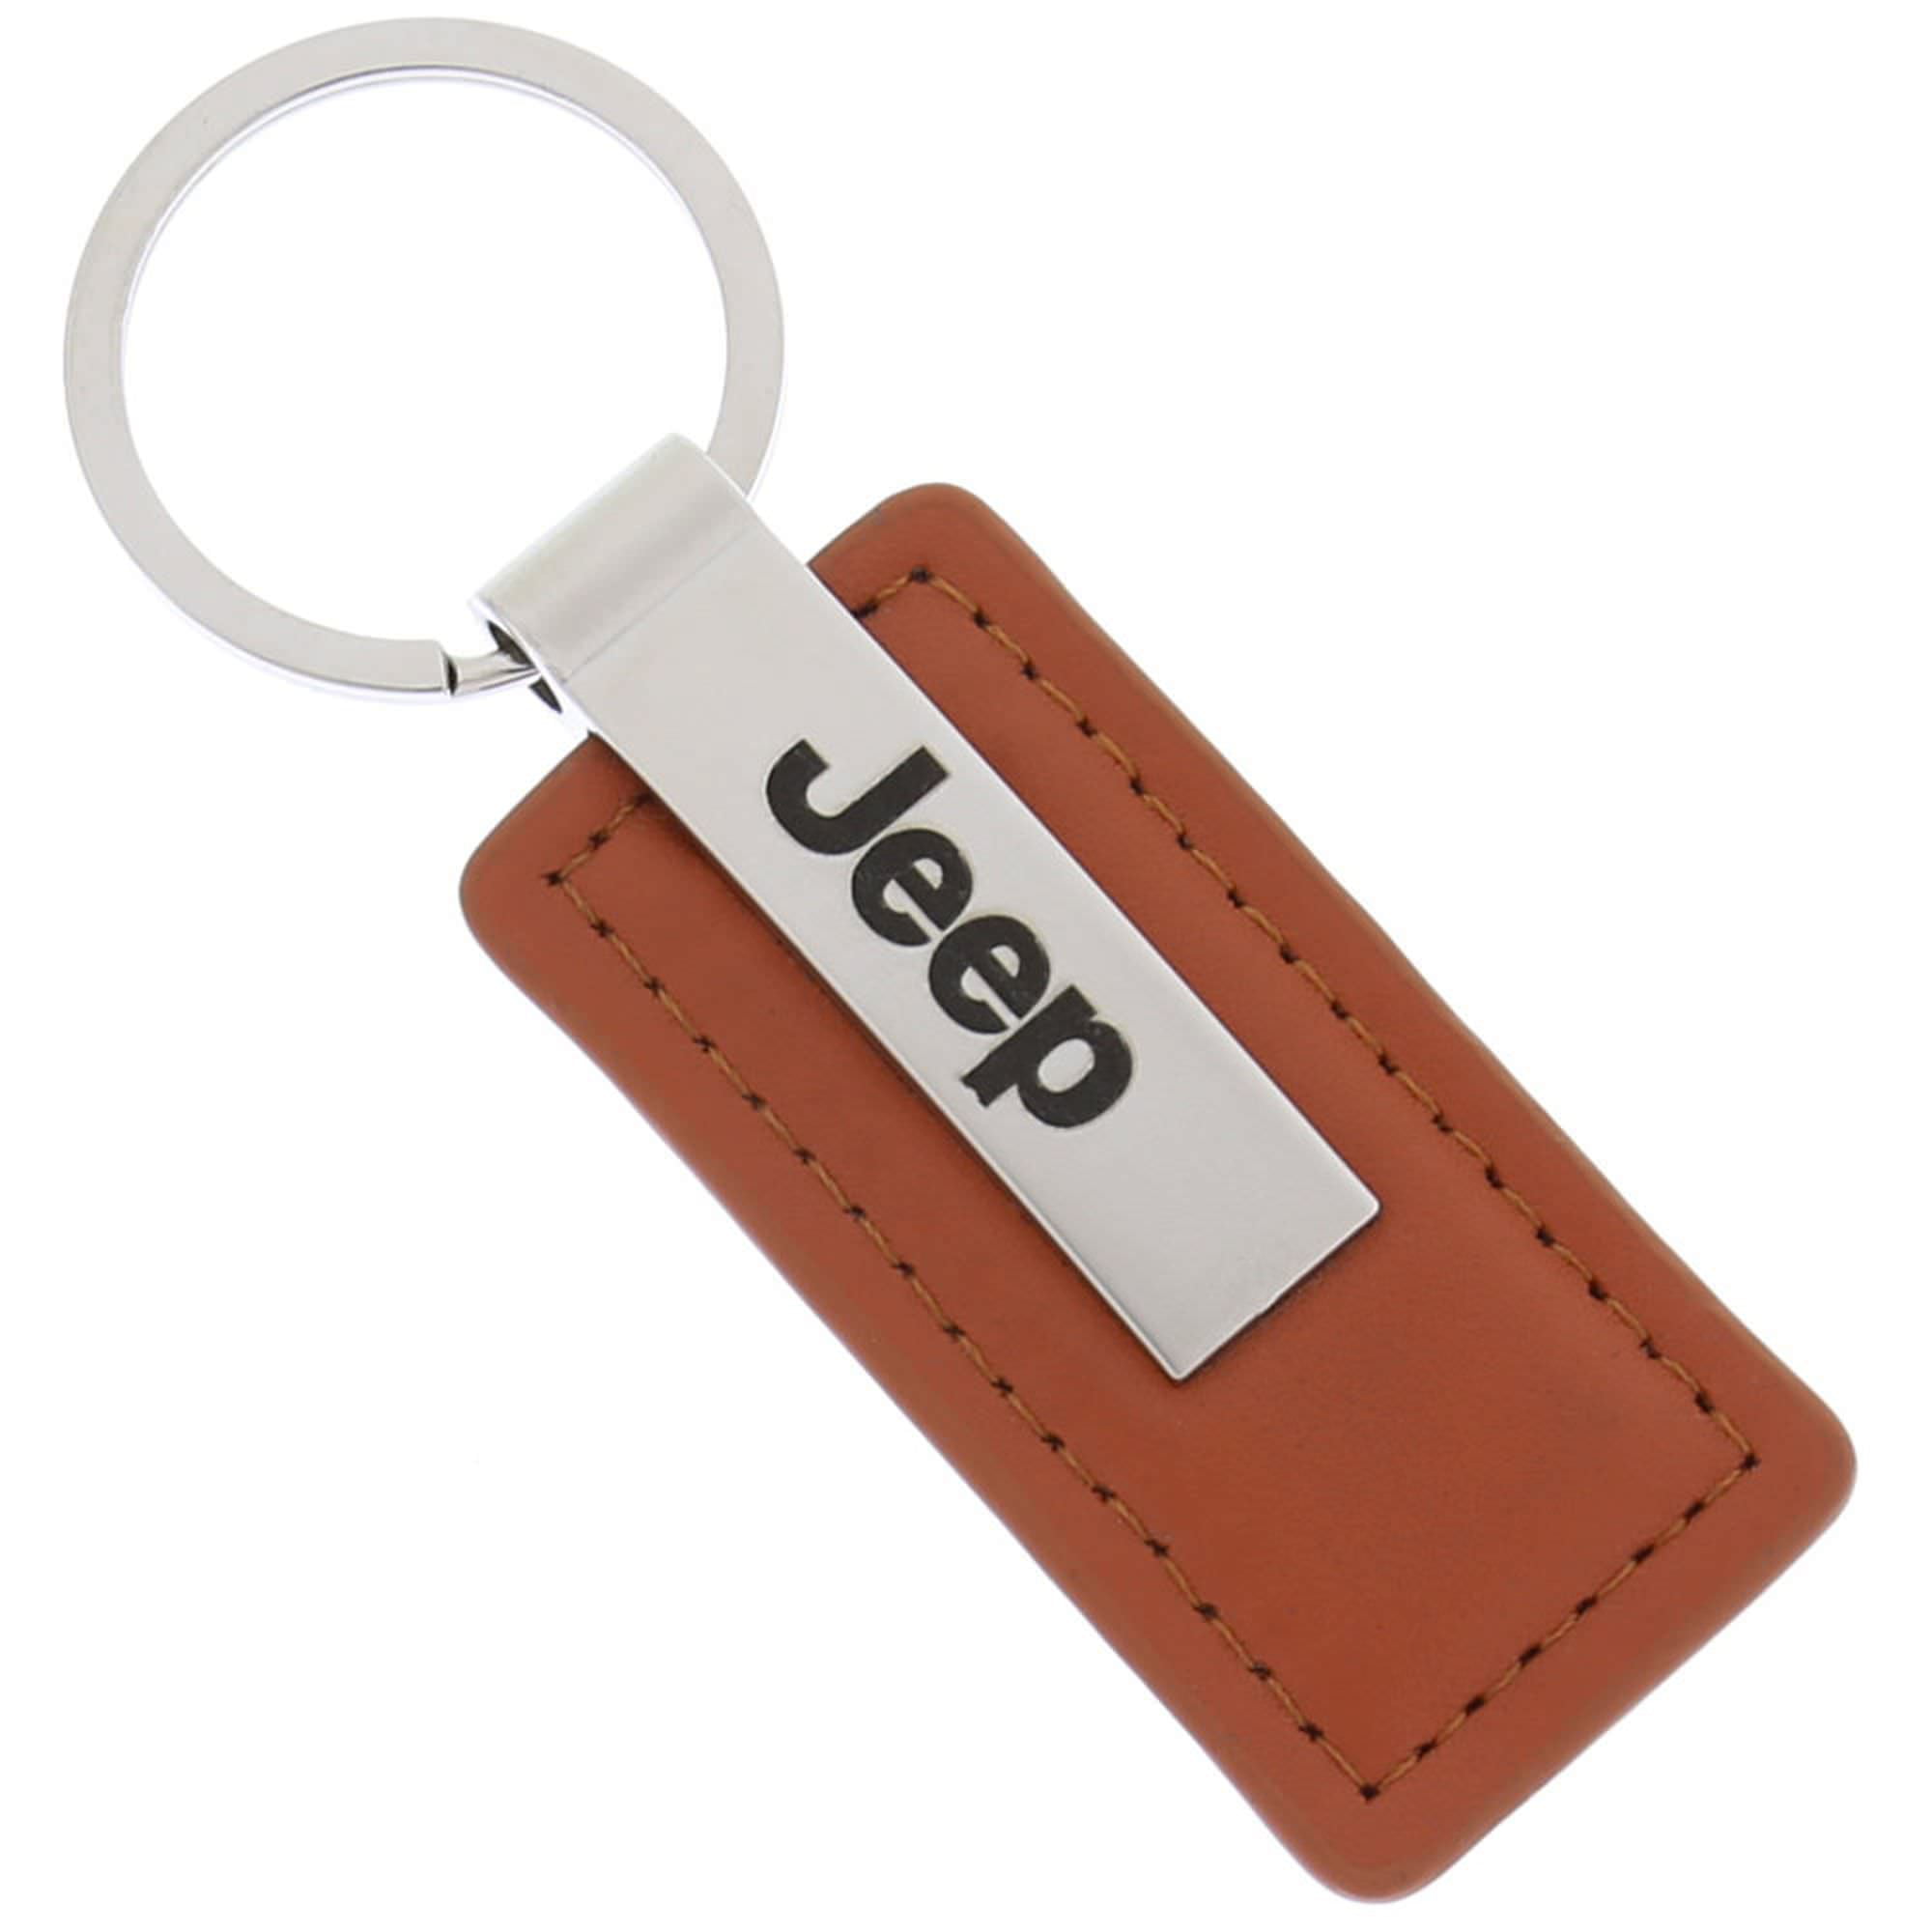 Personalised keychain. Jeep keychain keyring leather 